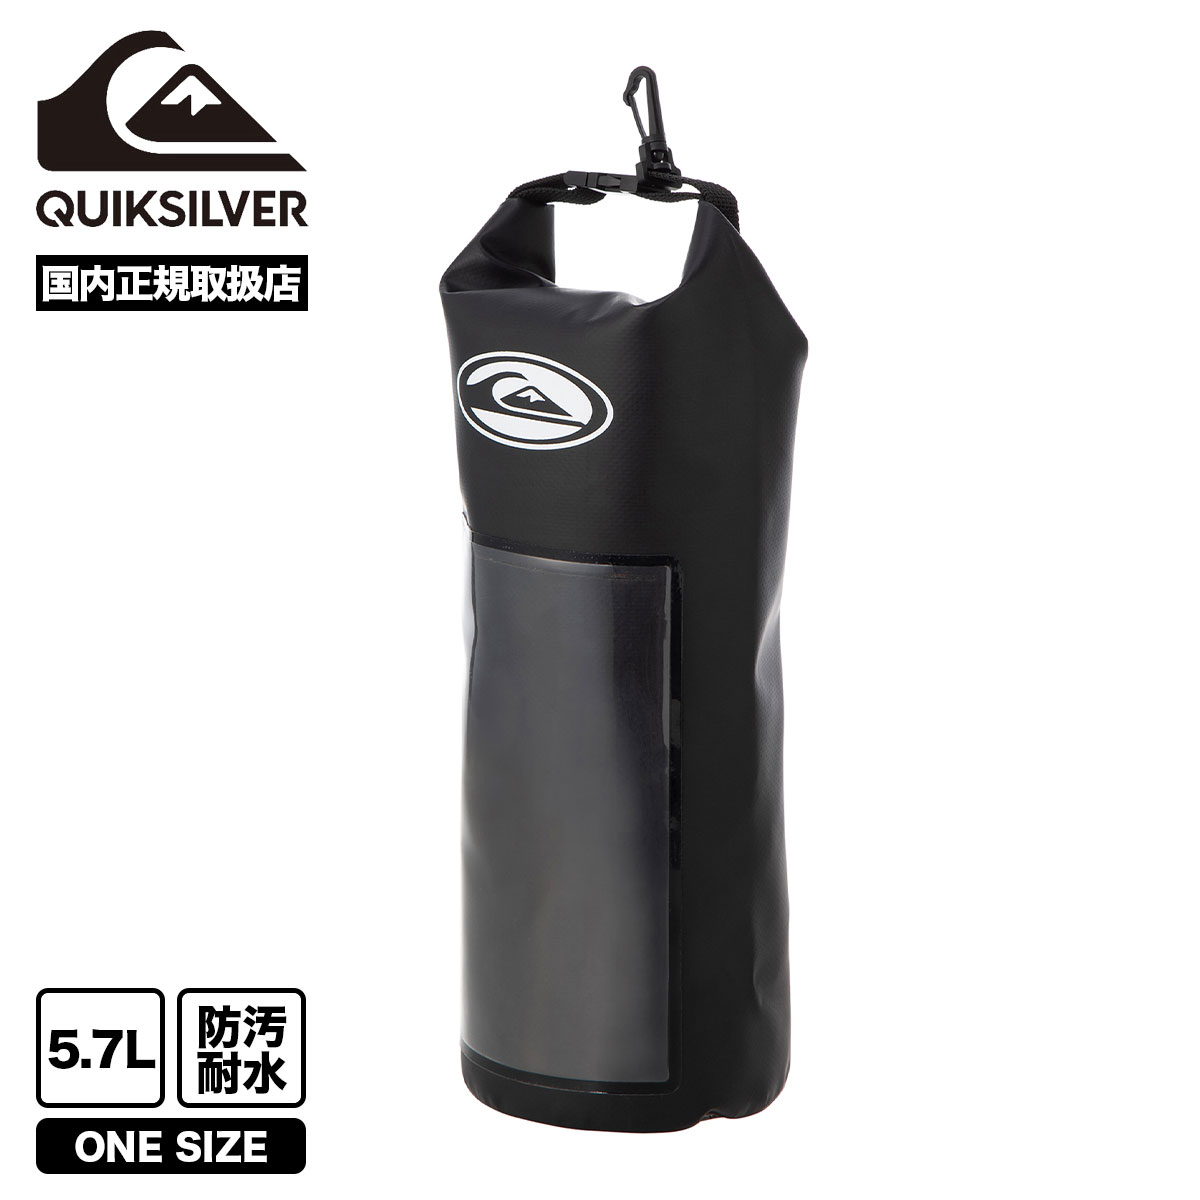 Quicksilver正規品販売店、ジャックオーシャンスポーツ